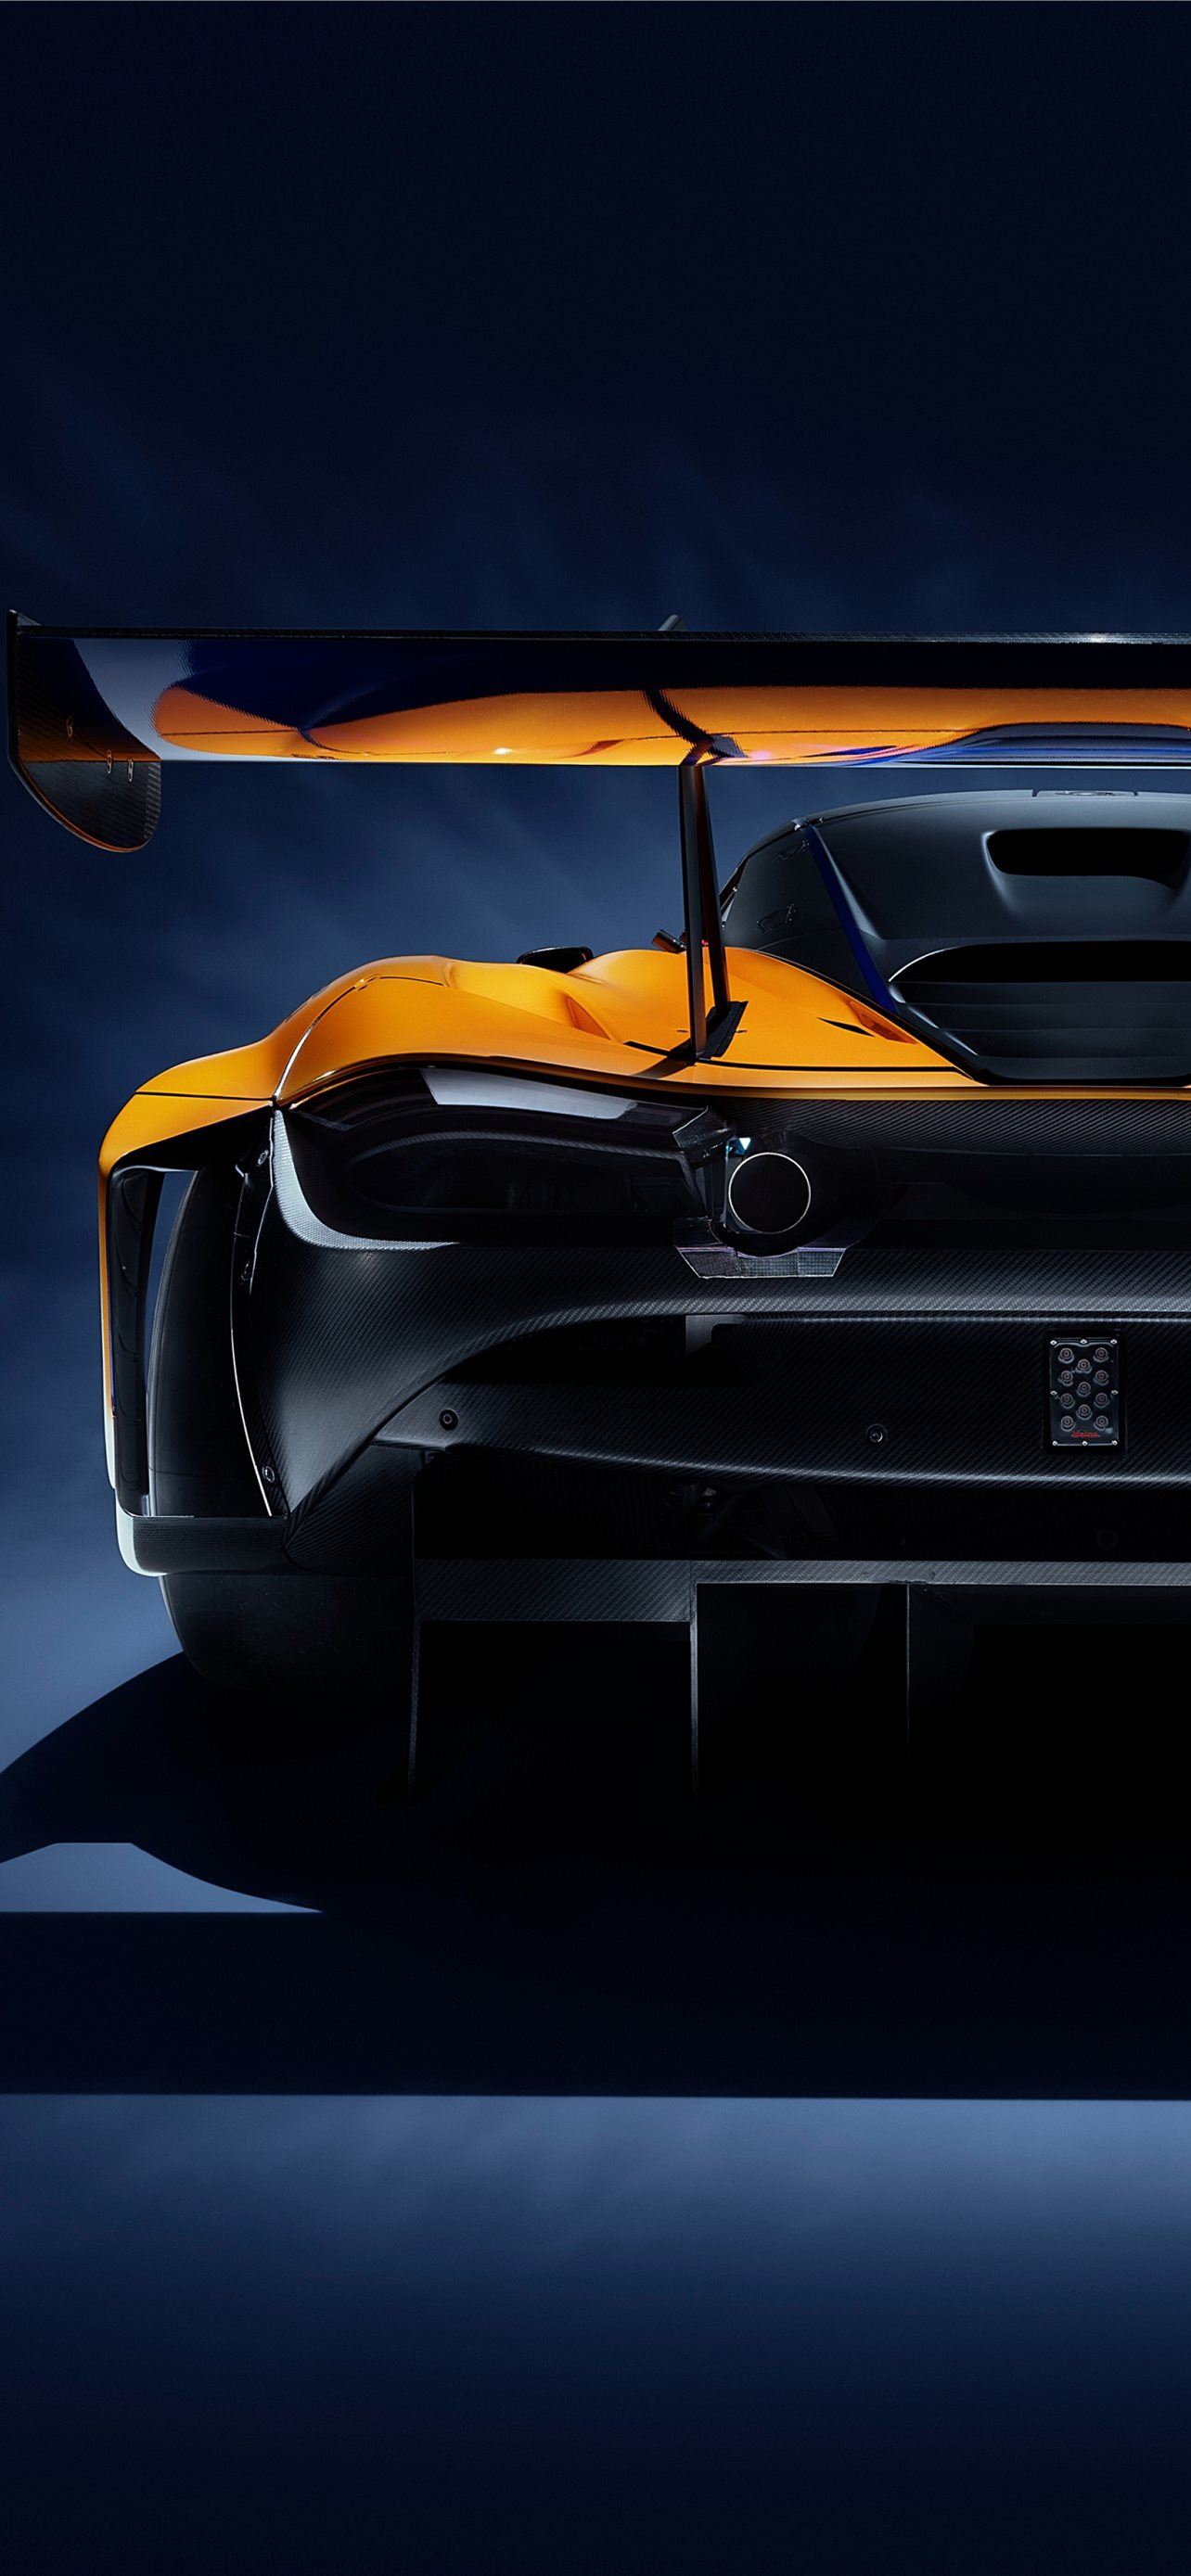 McLaren 720S GT3 supercar 2019 Cars 4K Cars Bikes iPhone Wallpapers Free  Download